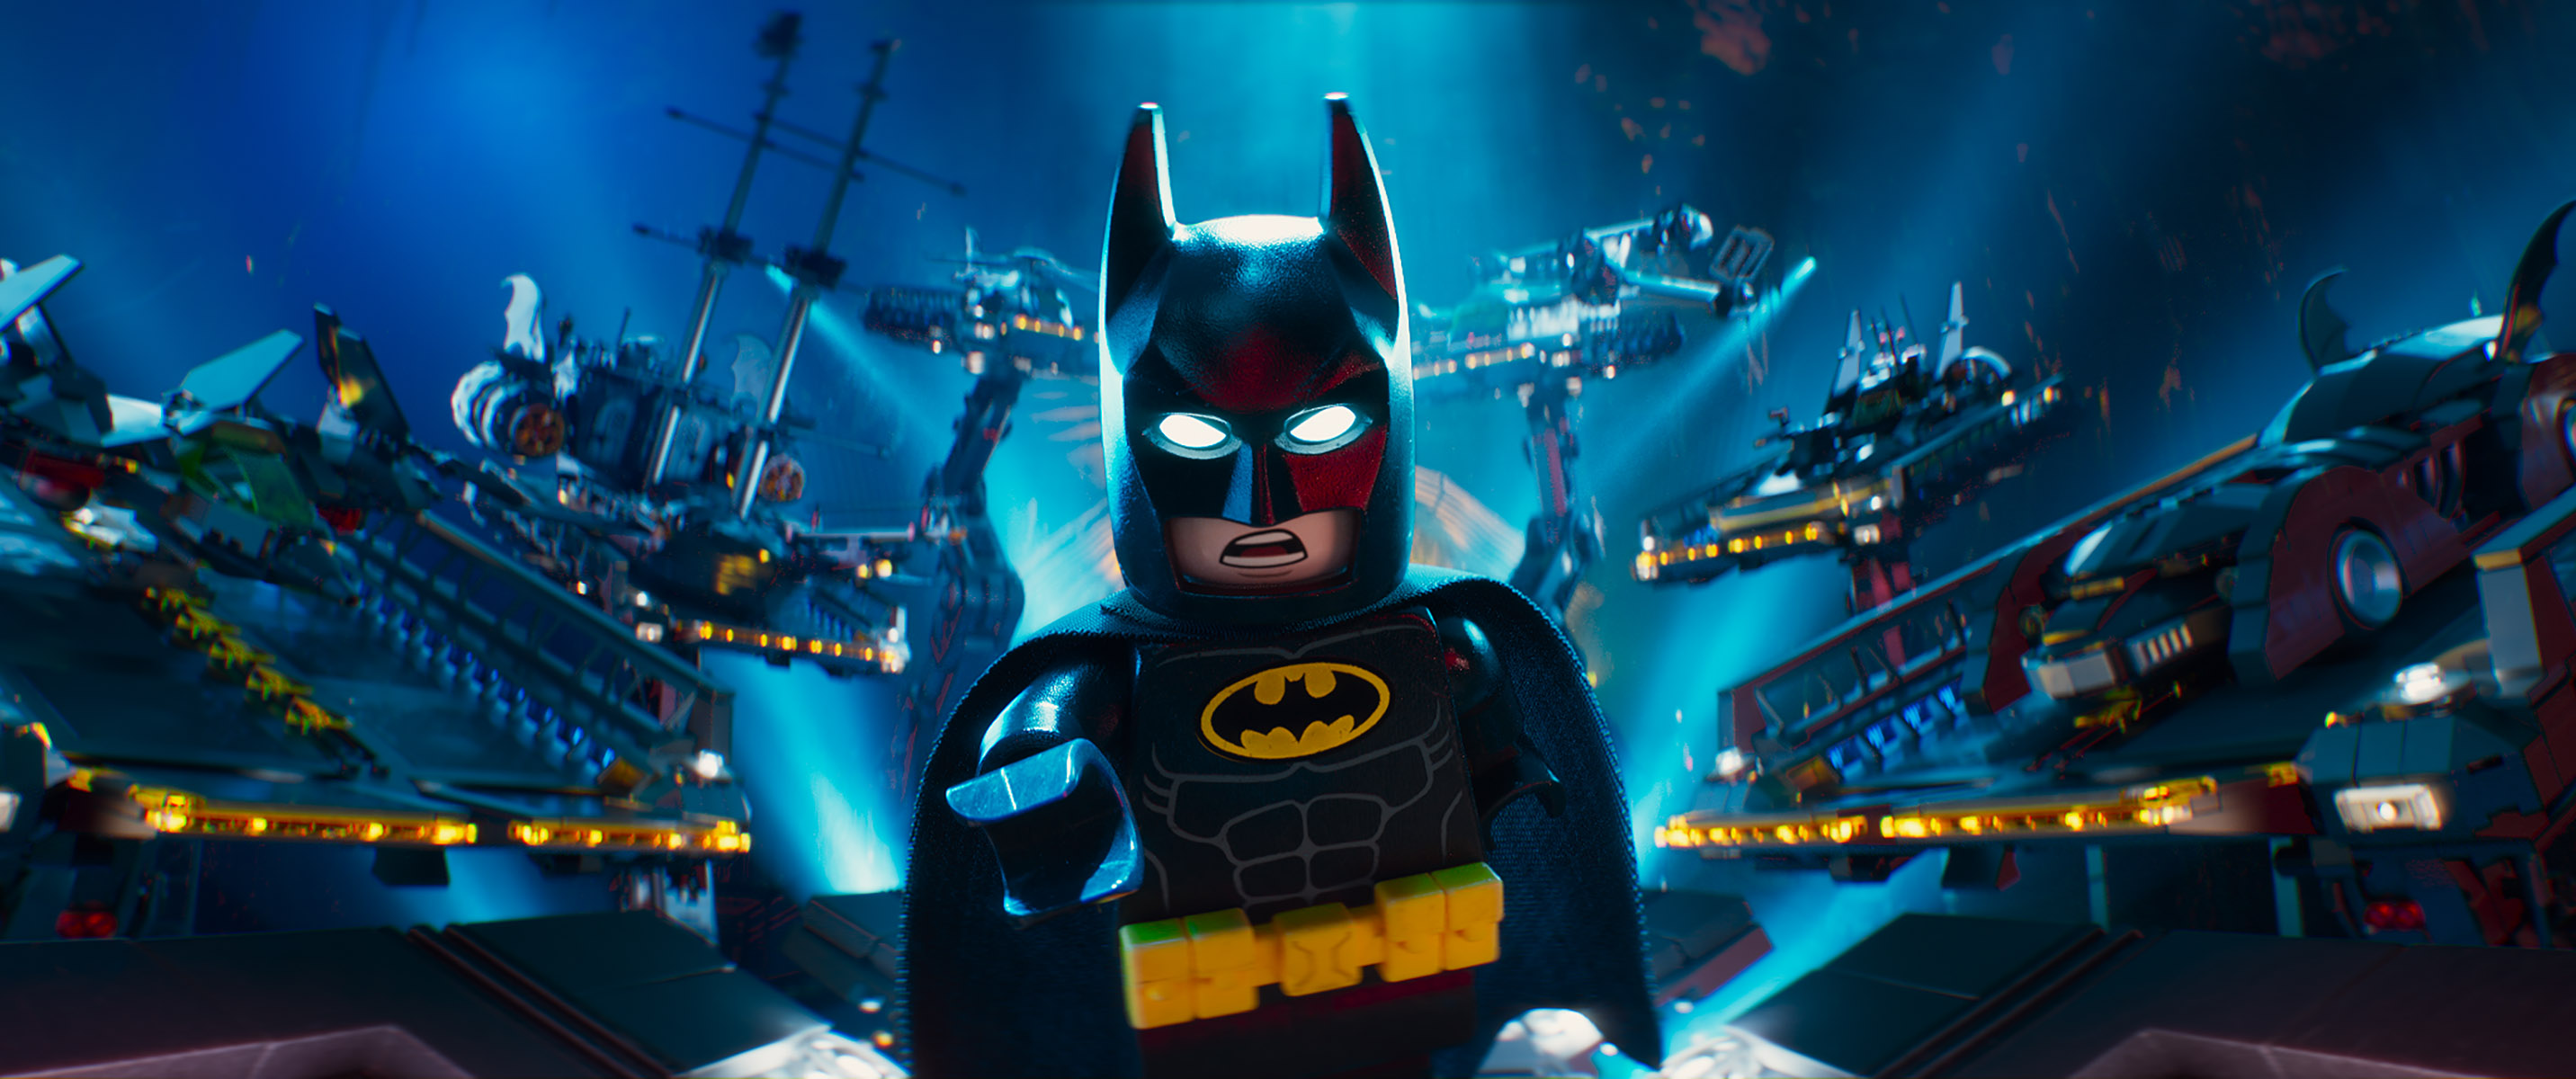 Will Arnett, star of new The Lego Batman Movie, gets interviewed